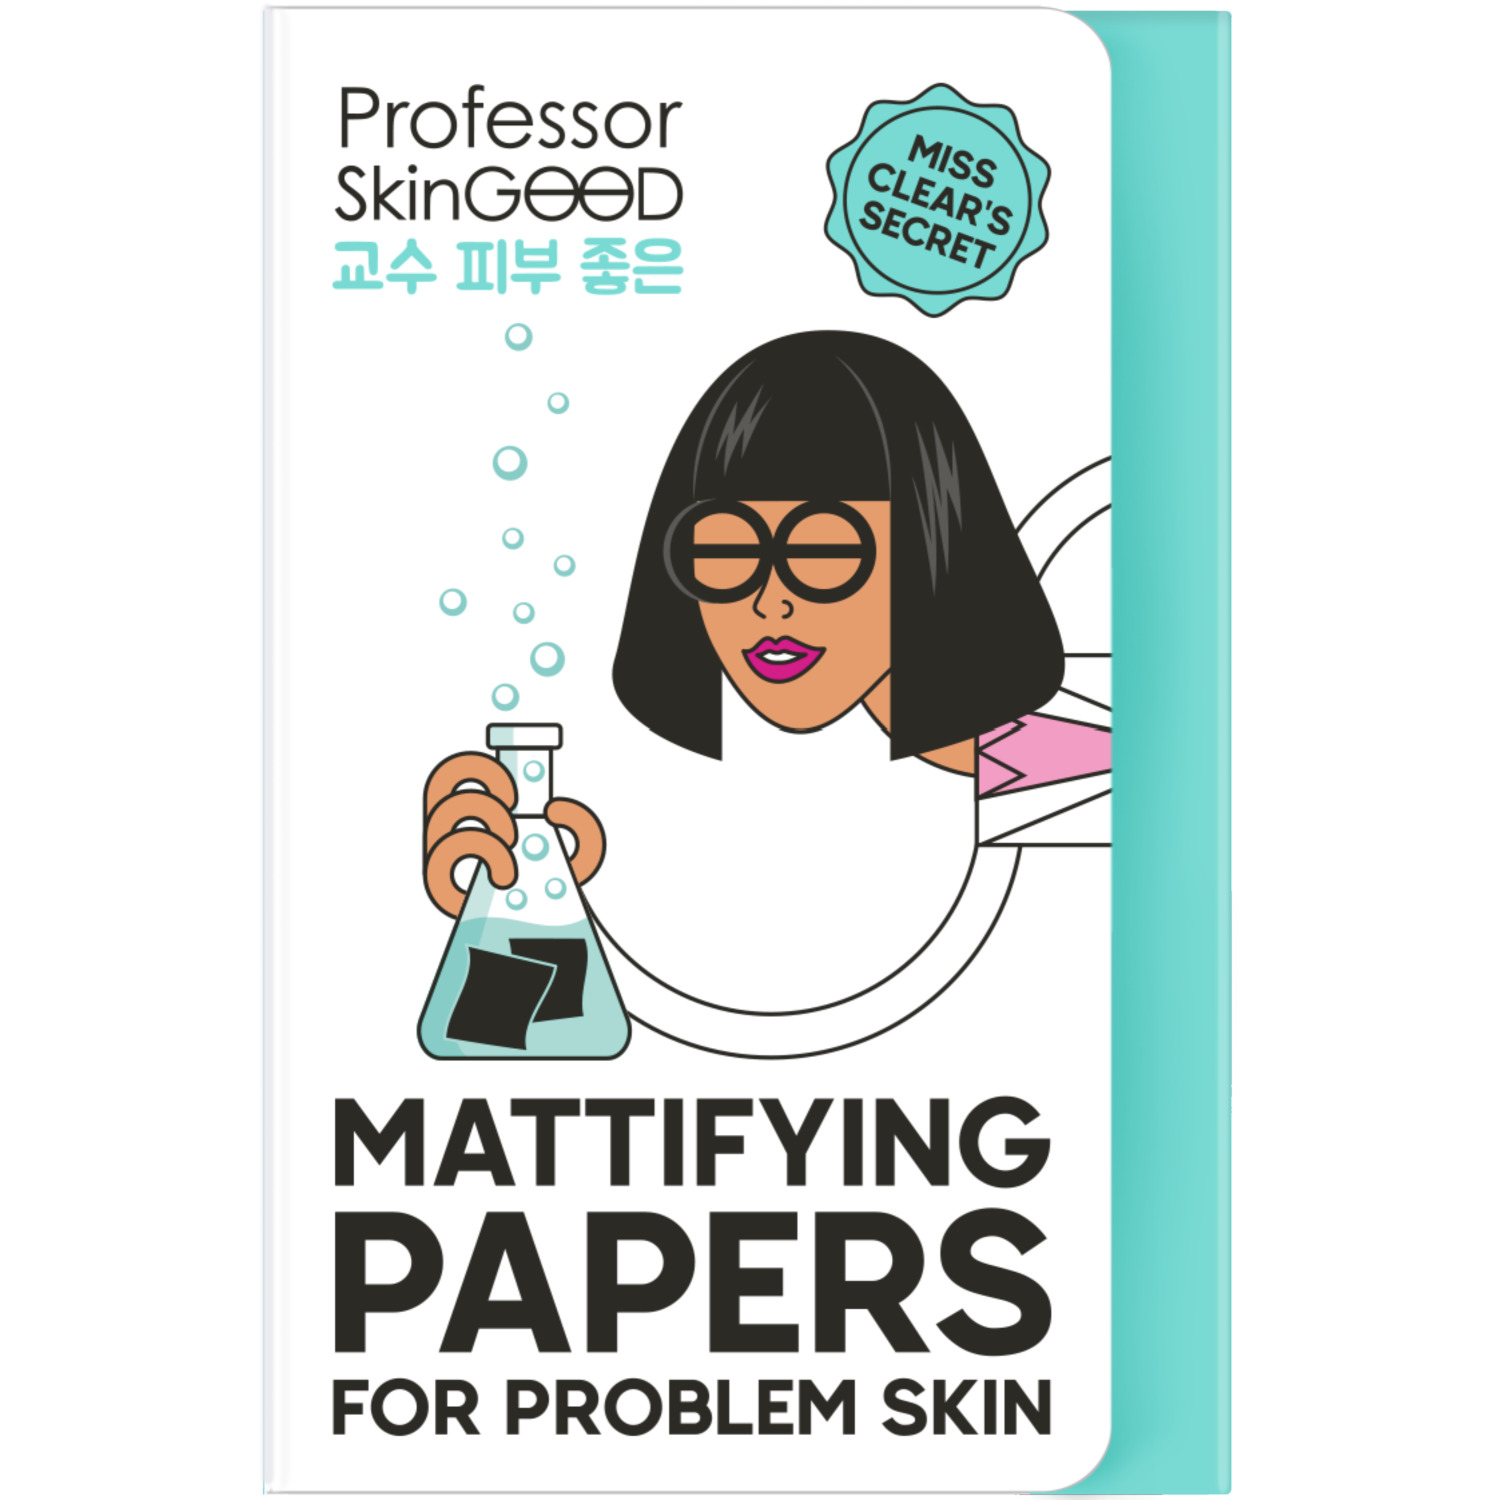 Салфетки Professor SkinGood Mattifying Papers матирующие для проблемной кожи 50 шт матирующие салфетки